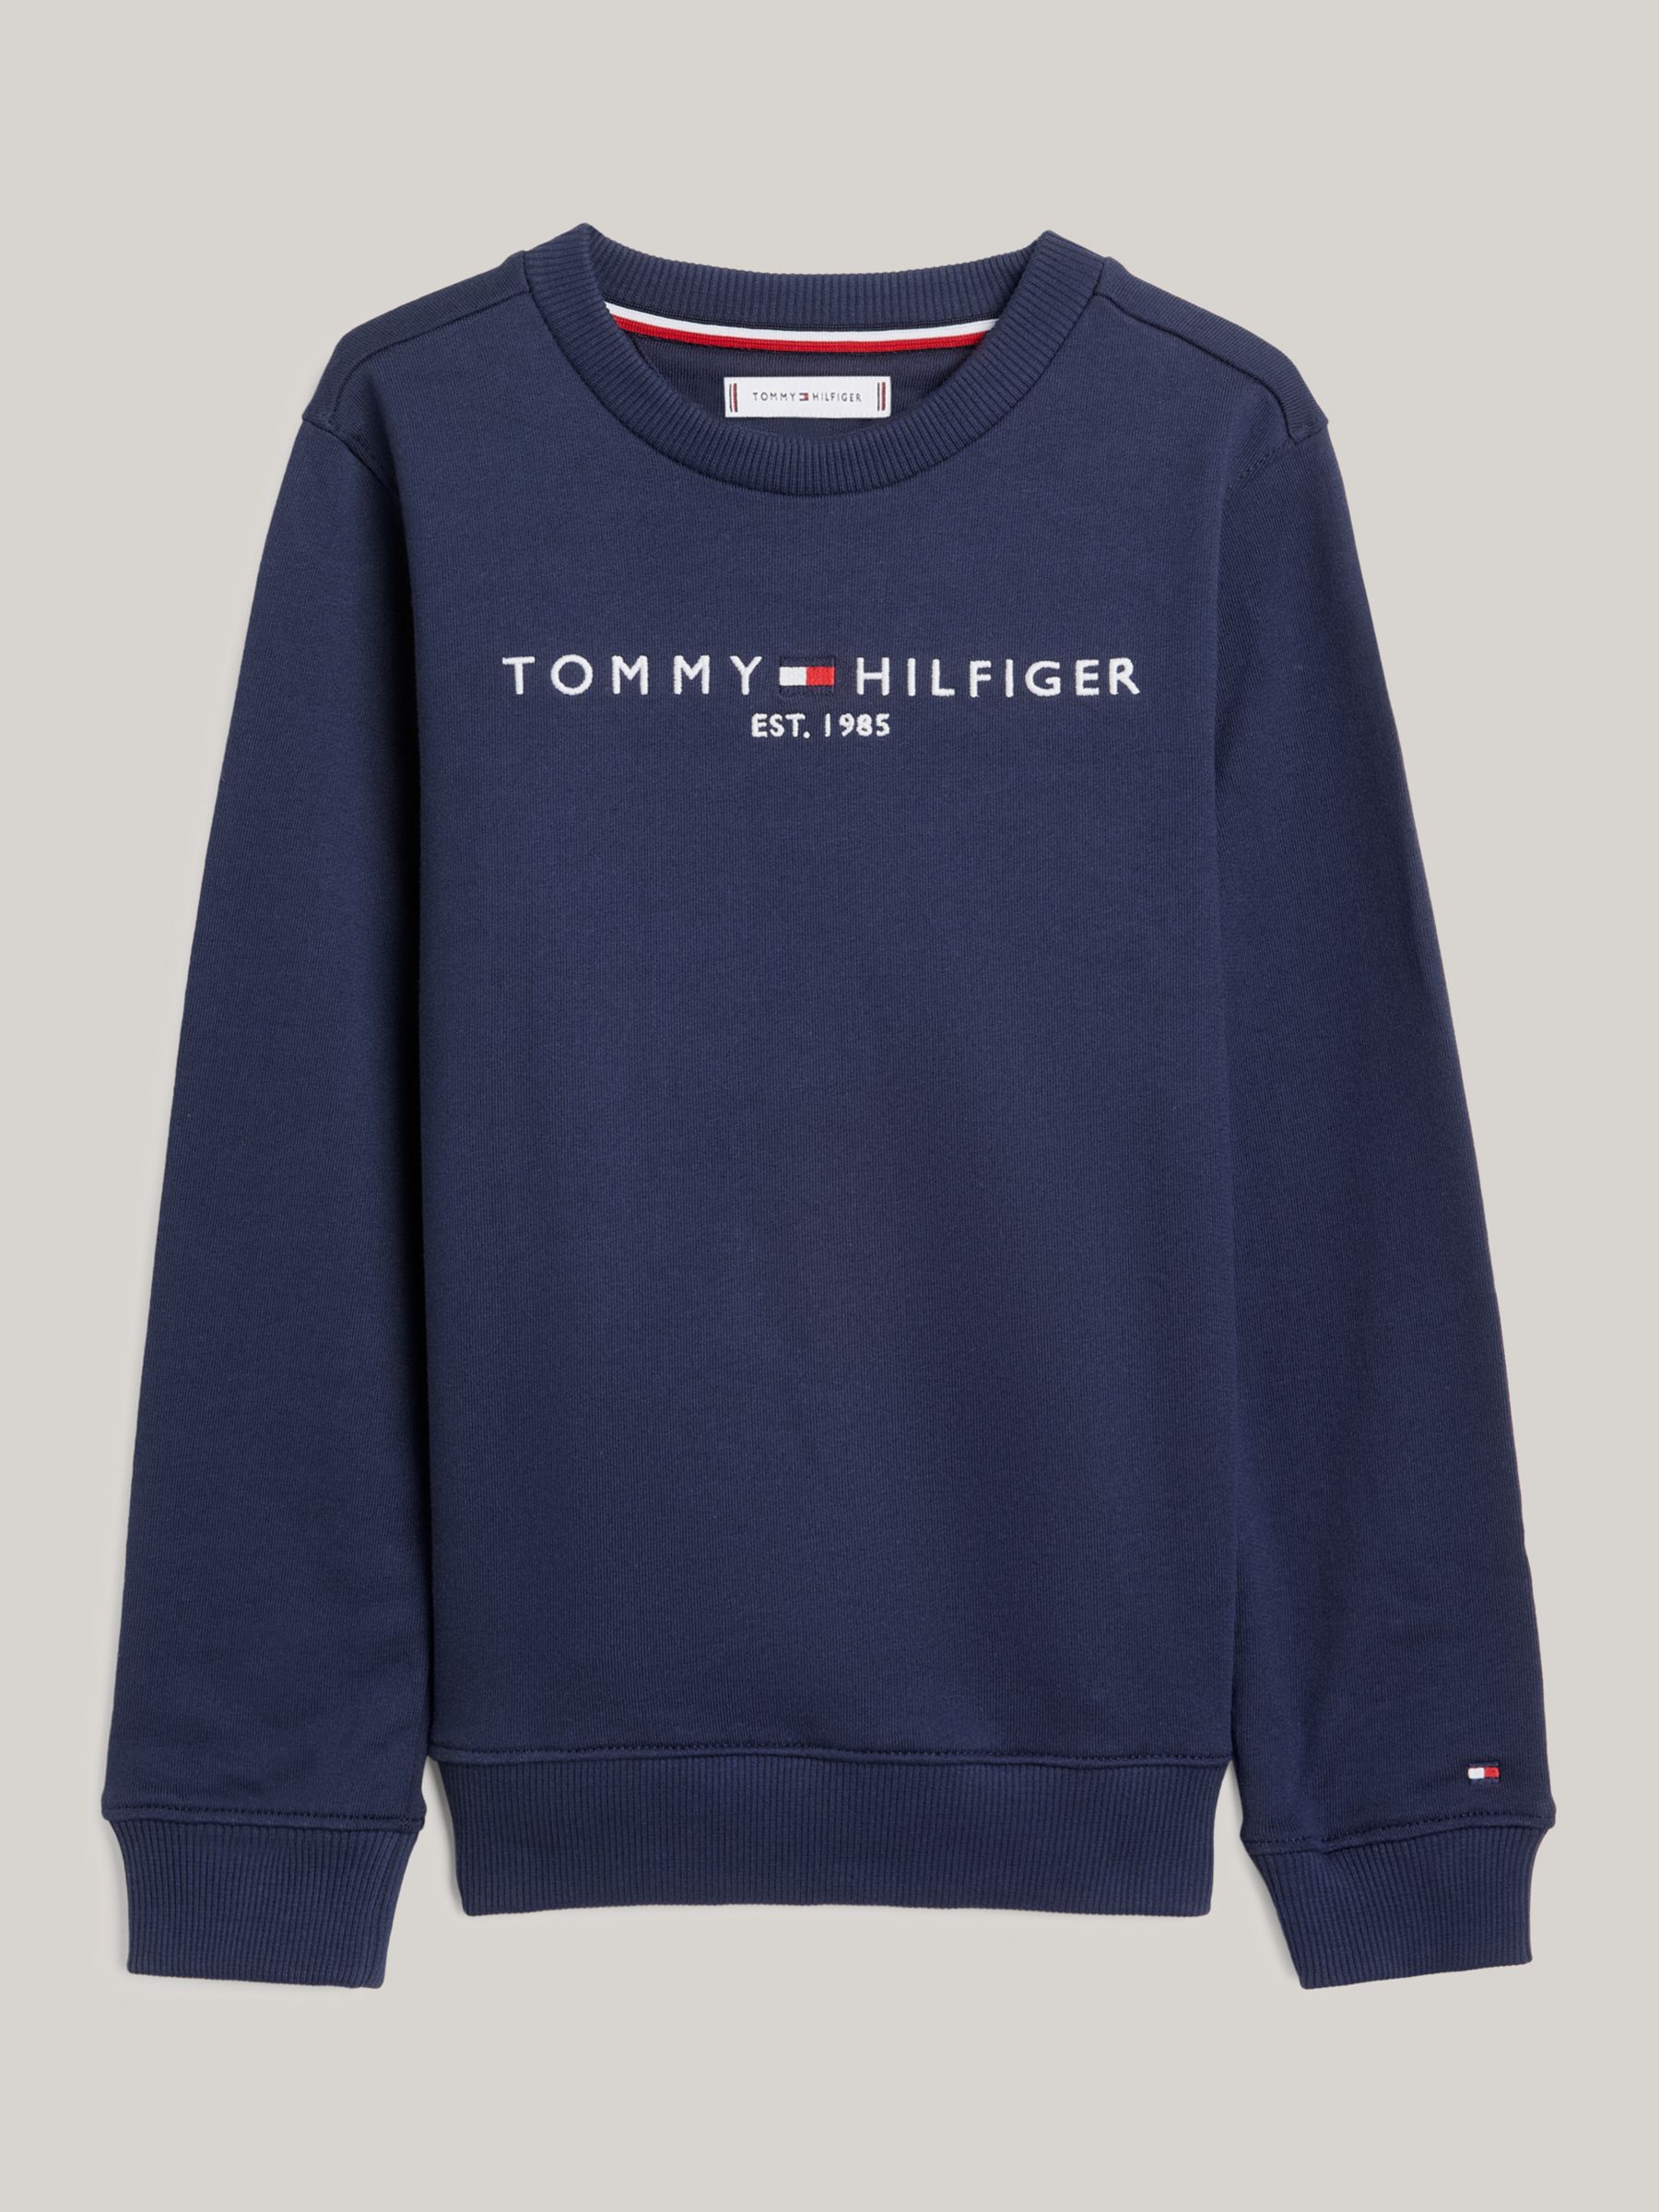 Tommy Hilfiger Kids\' Essential & Sweatshirt, John Organic Logo Navy Cotton Lewis at Twilight Partners